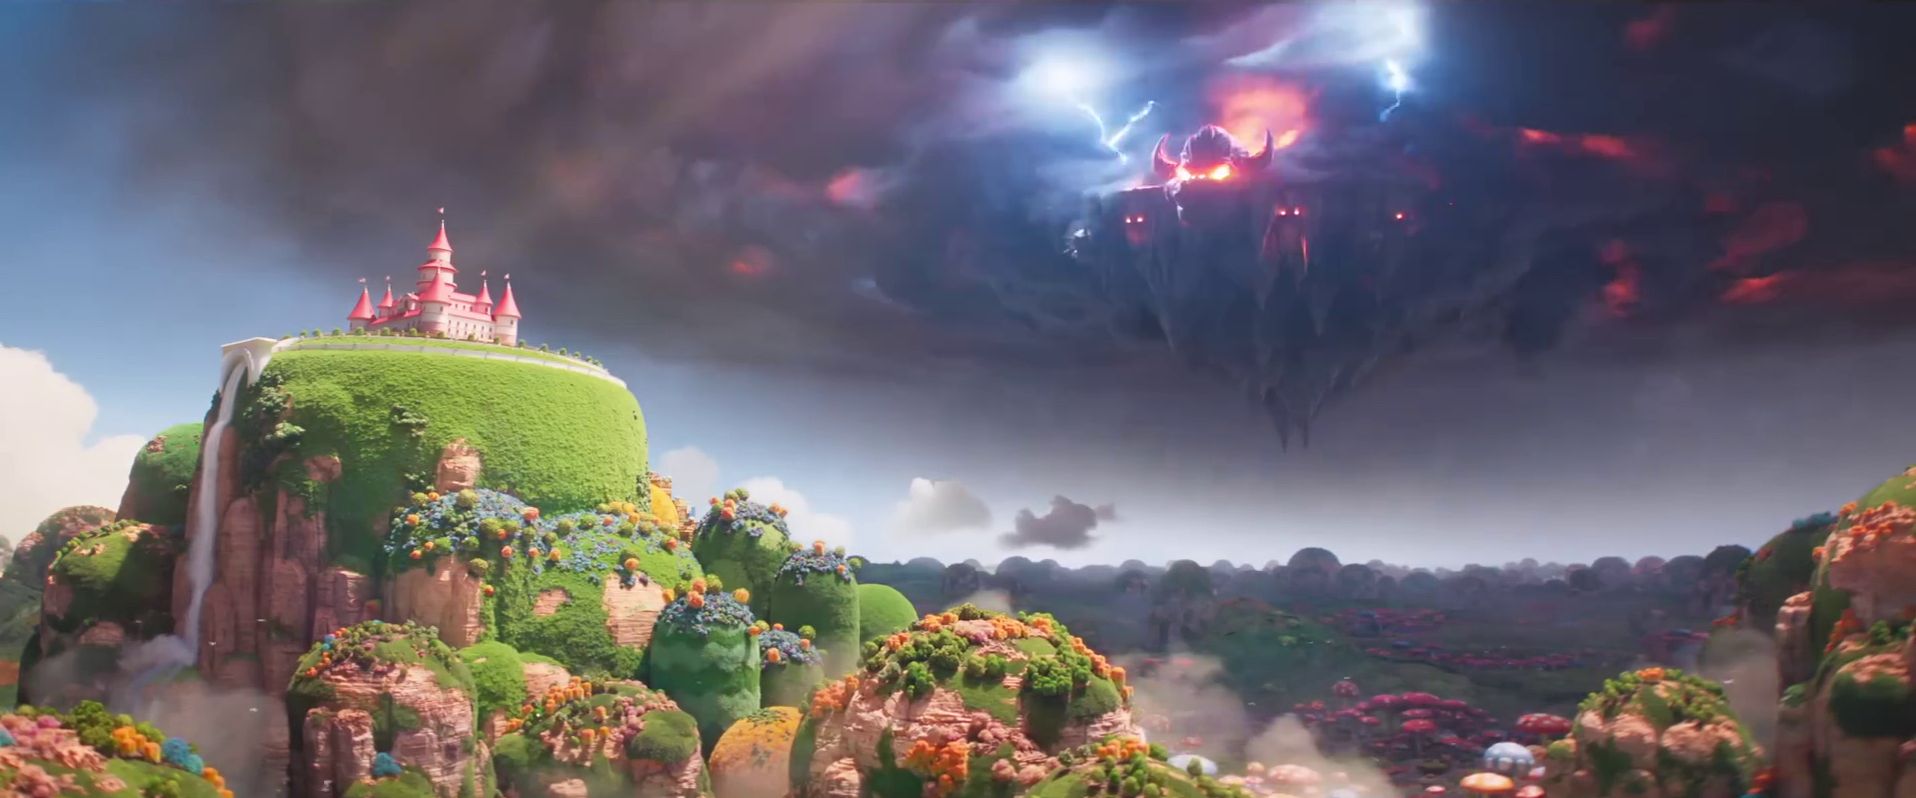 Mushroom Kingdom Bowser Flying Castle Super Mario Bros. Movie